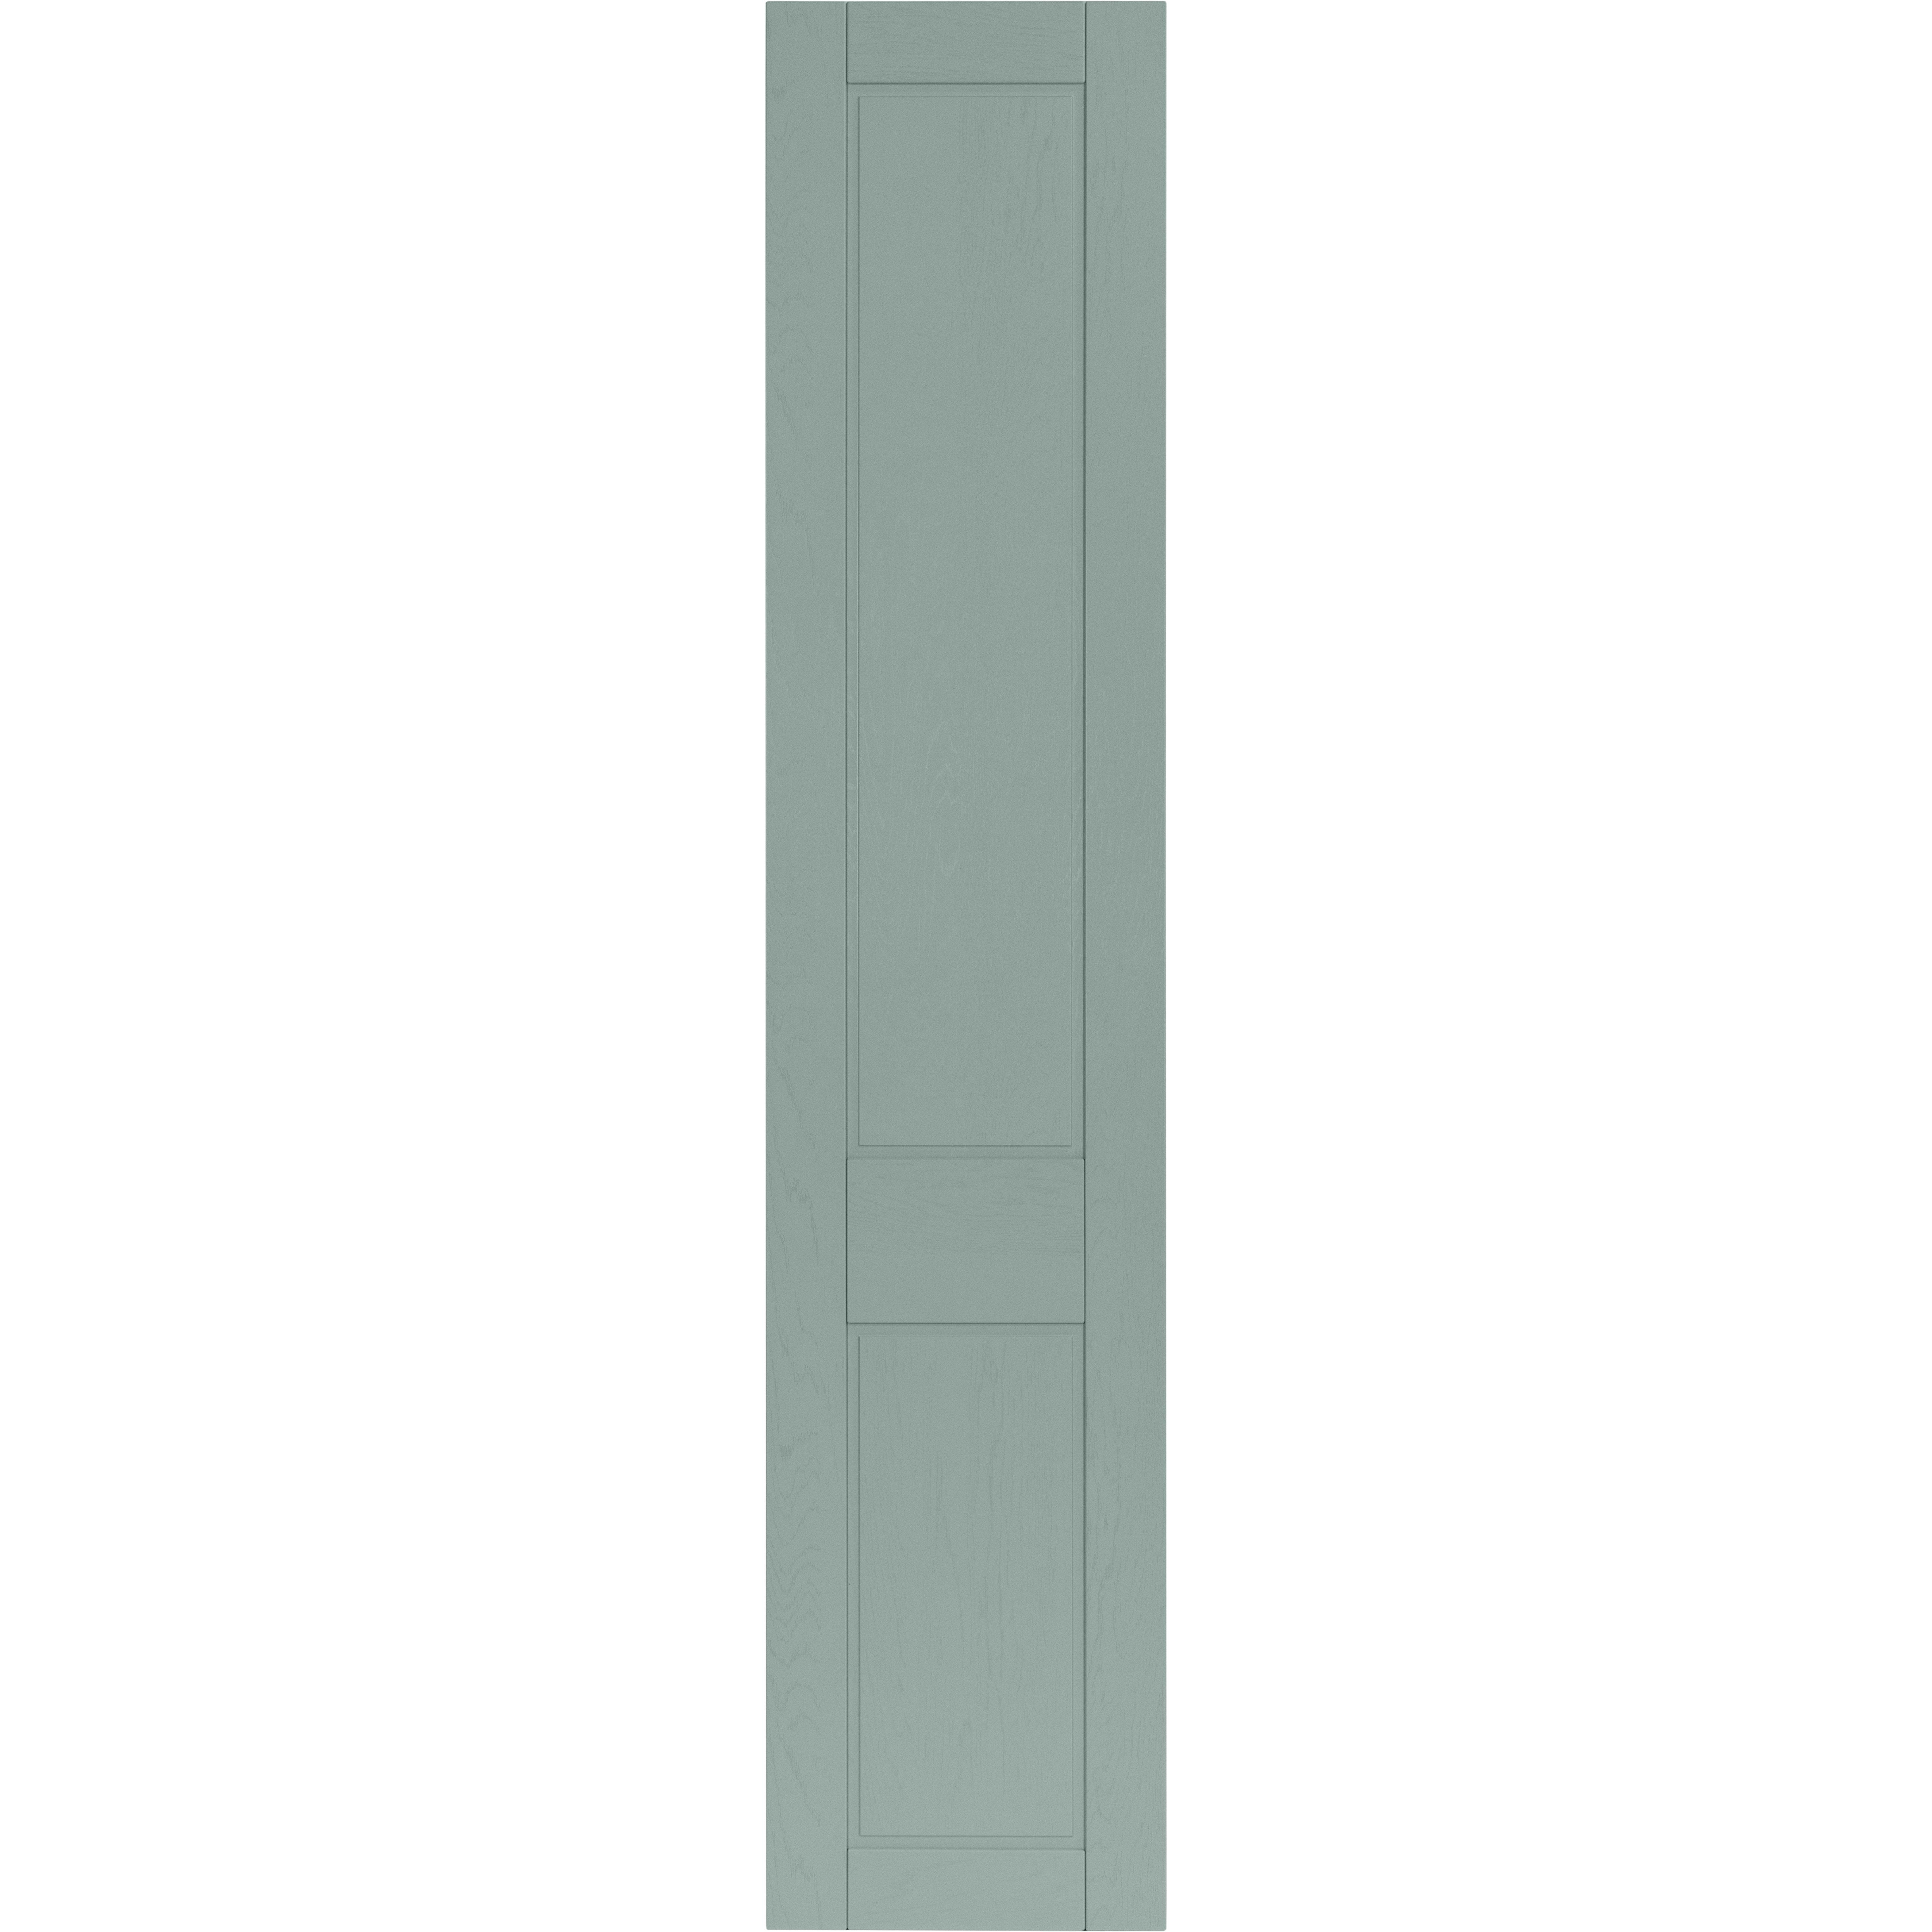 Дверь для шкафа Delinia ID «Томари» 30x77 см, МДФ, цвет голубой